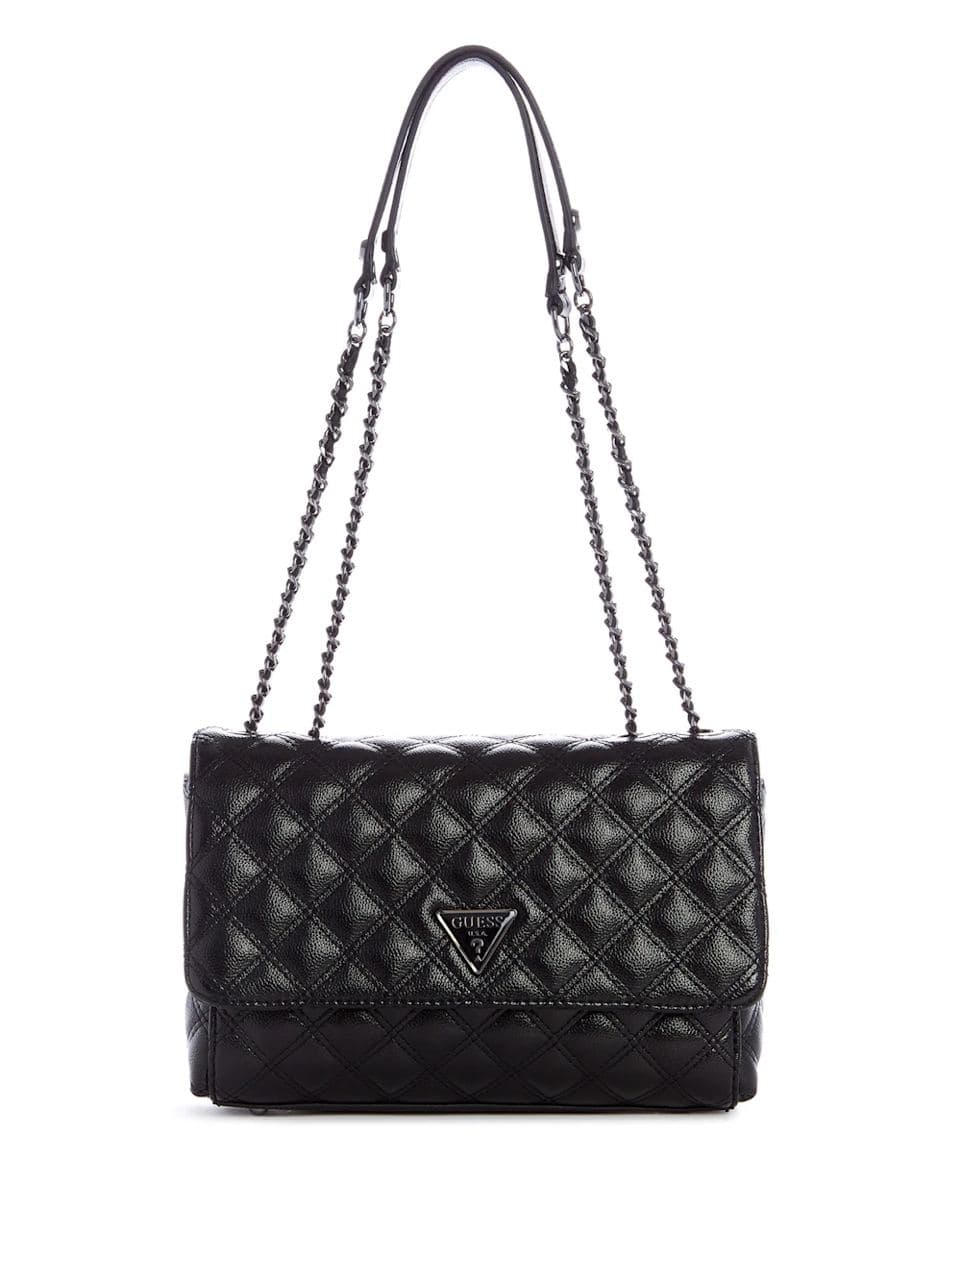 Women's luxury bags | Roger Vivier